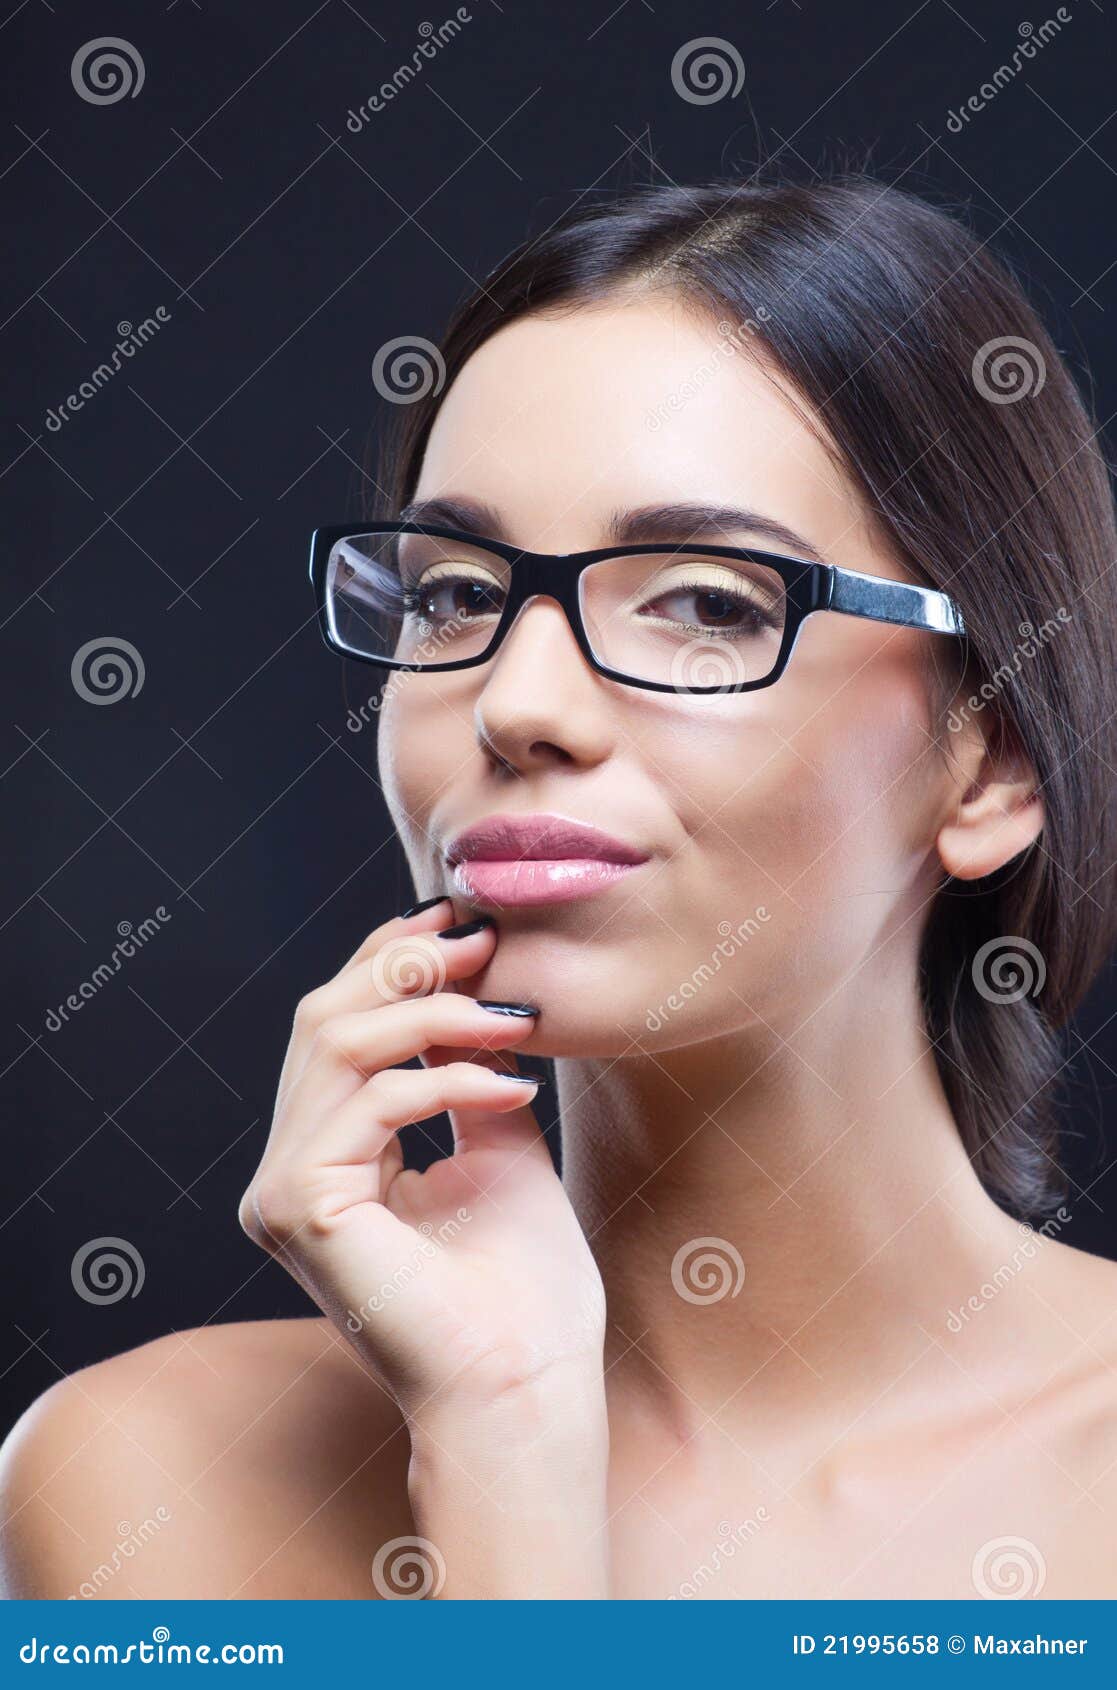 portrait of girl wearing optical glasses